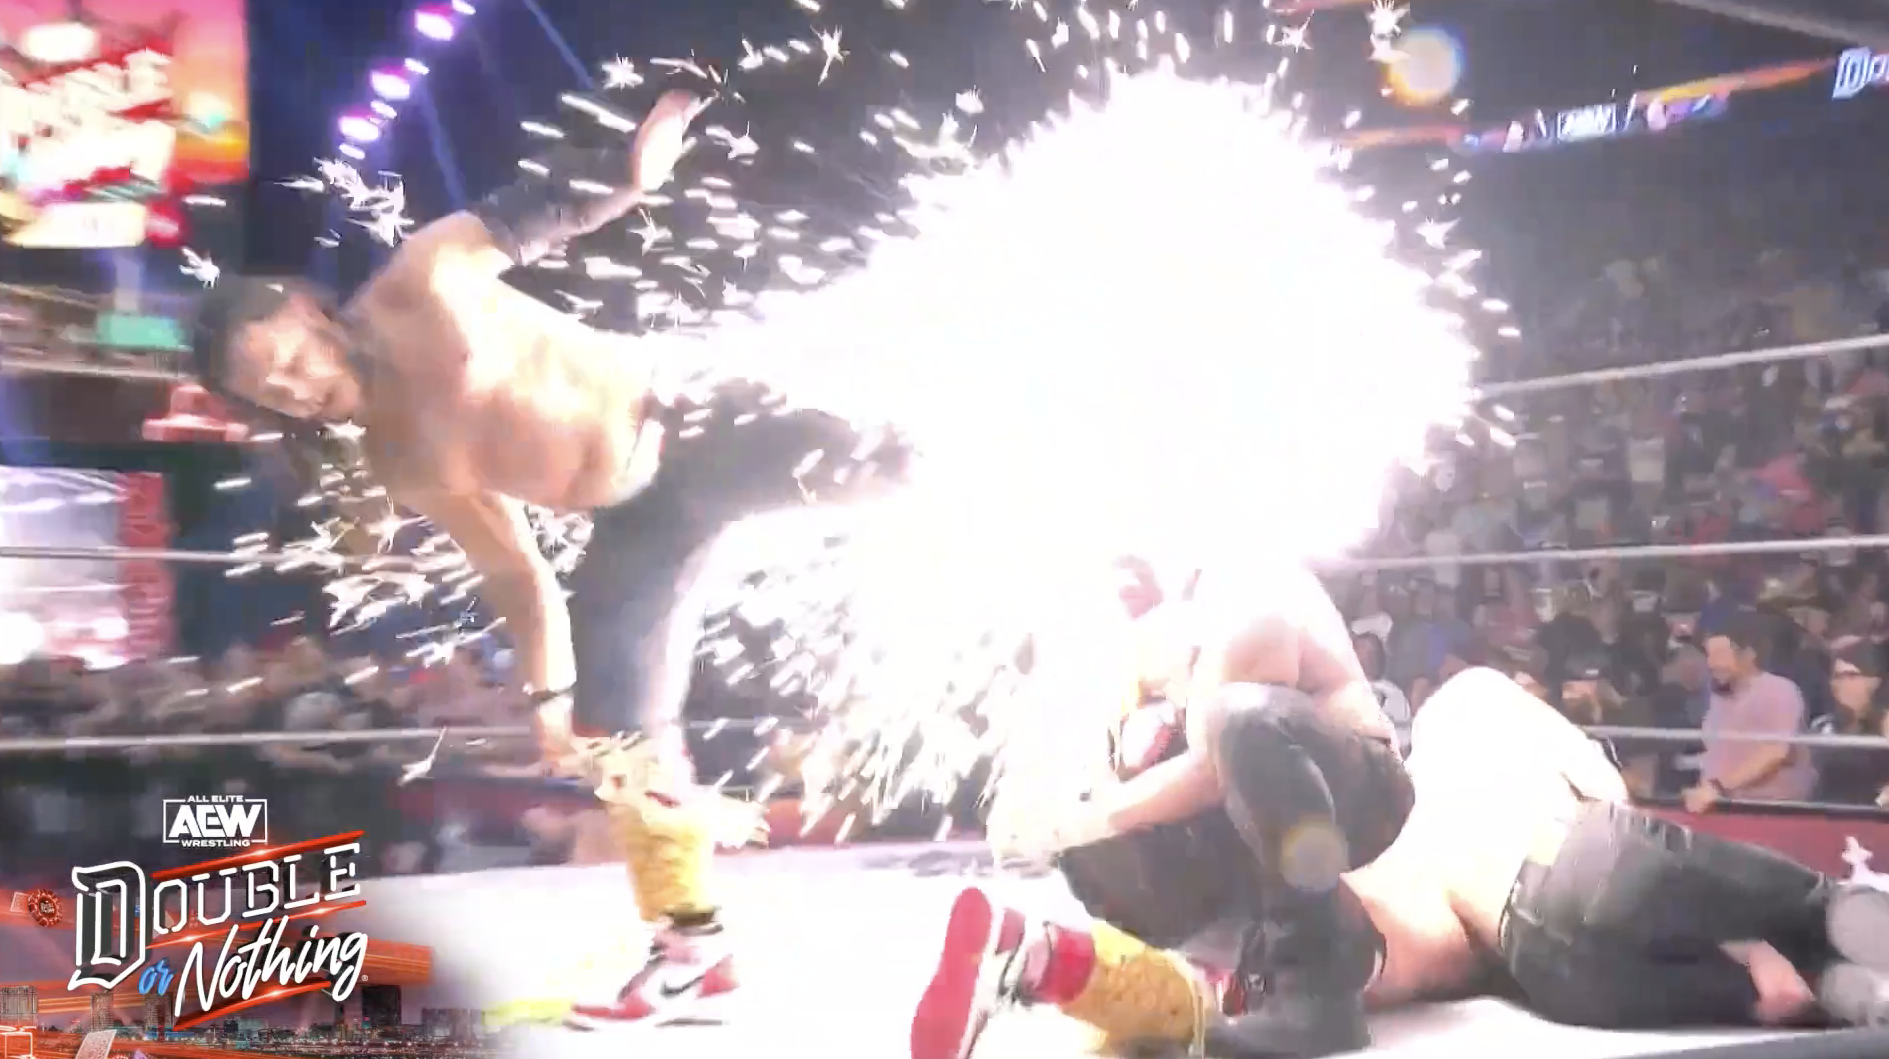 AEW Wrestler's Shoe Explodes